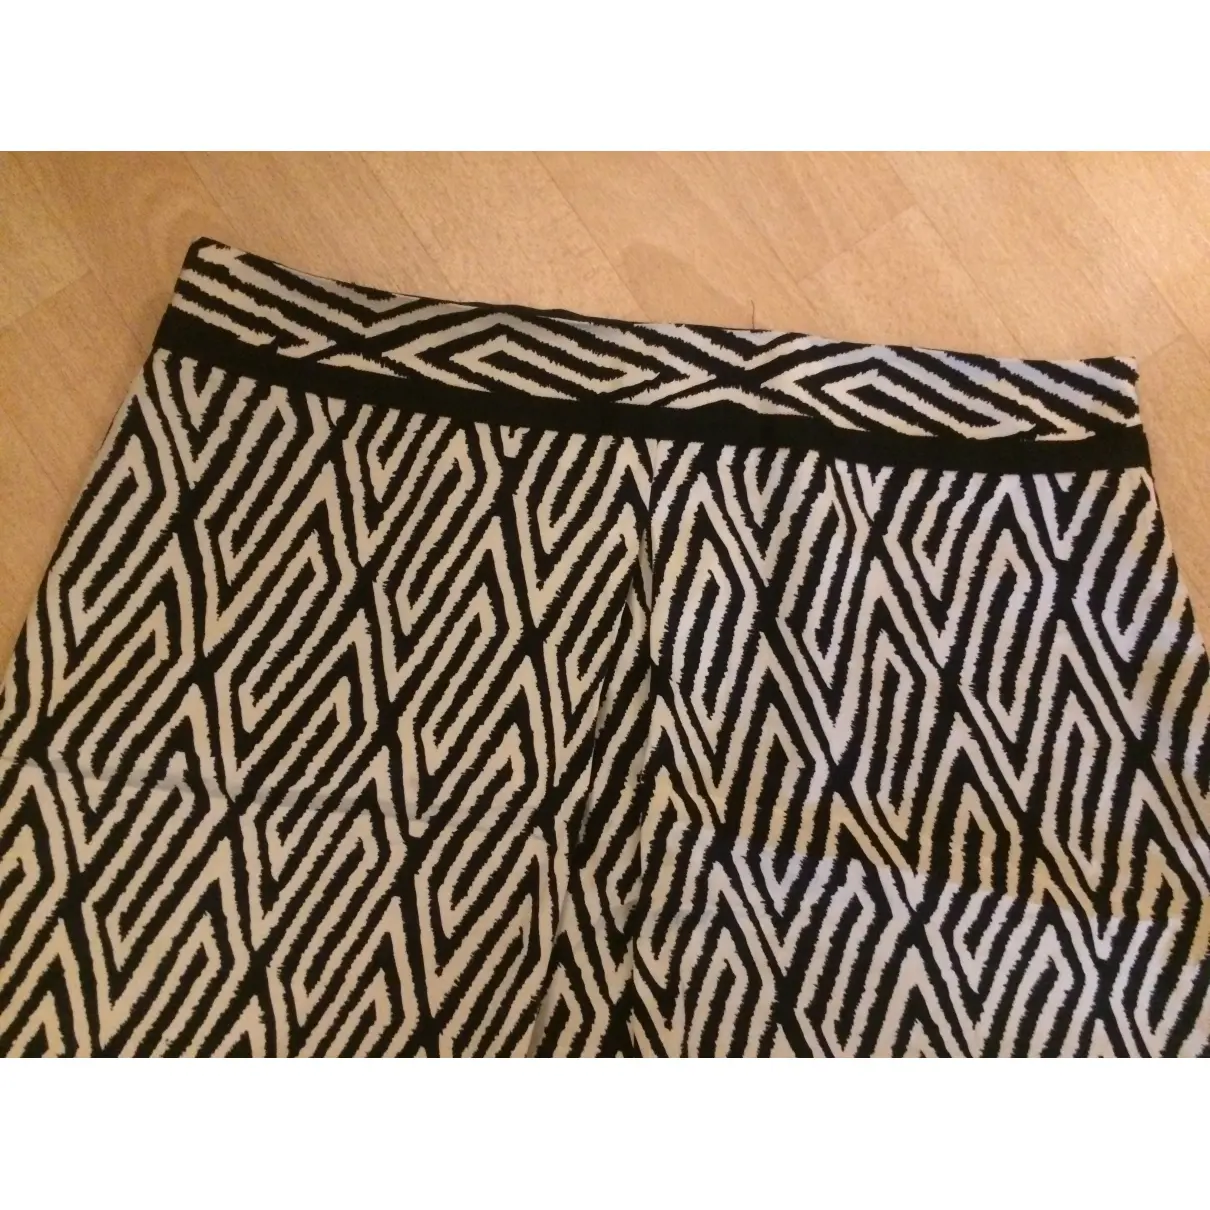 Rodier Silk mid-length skirt for sale